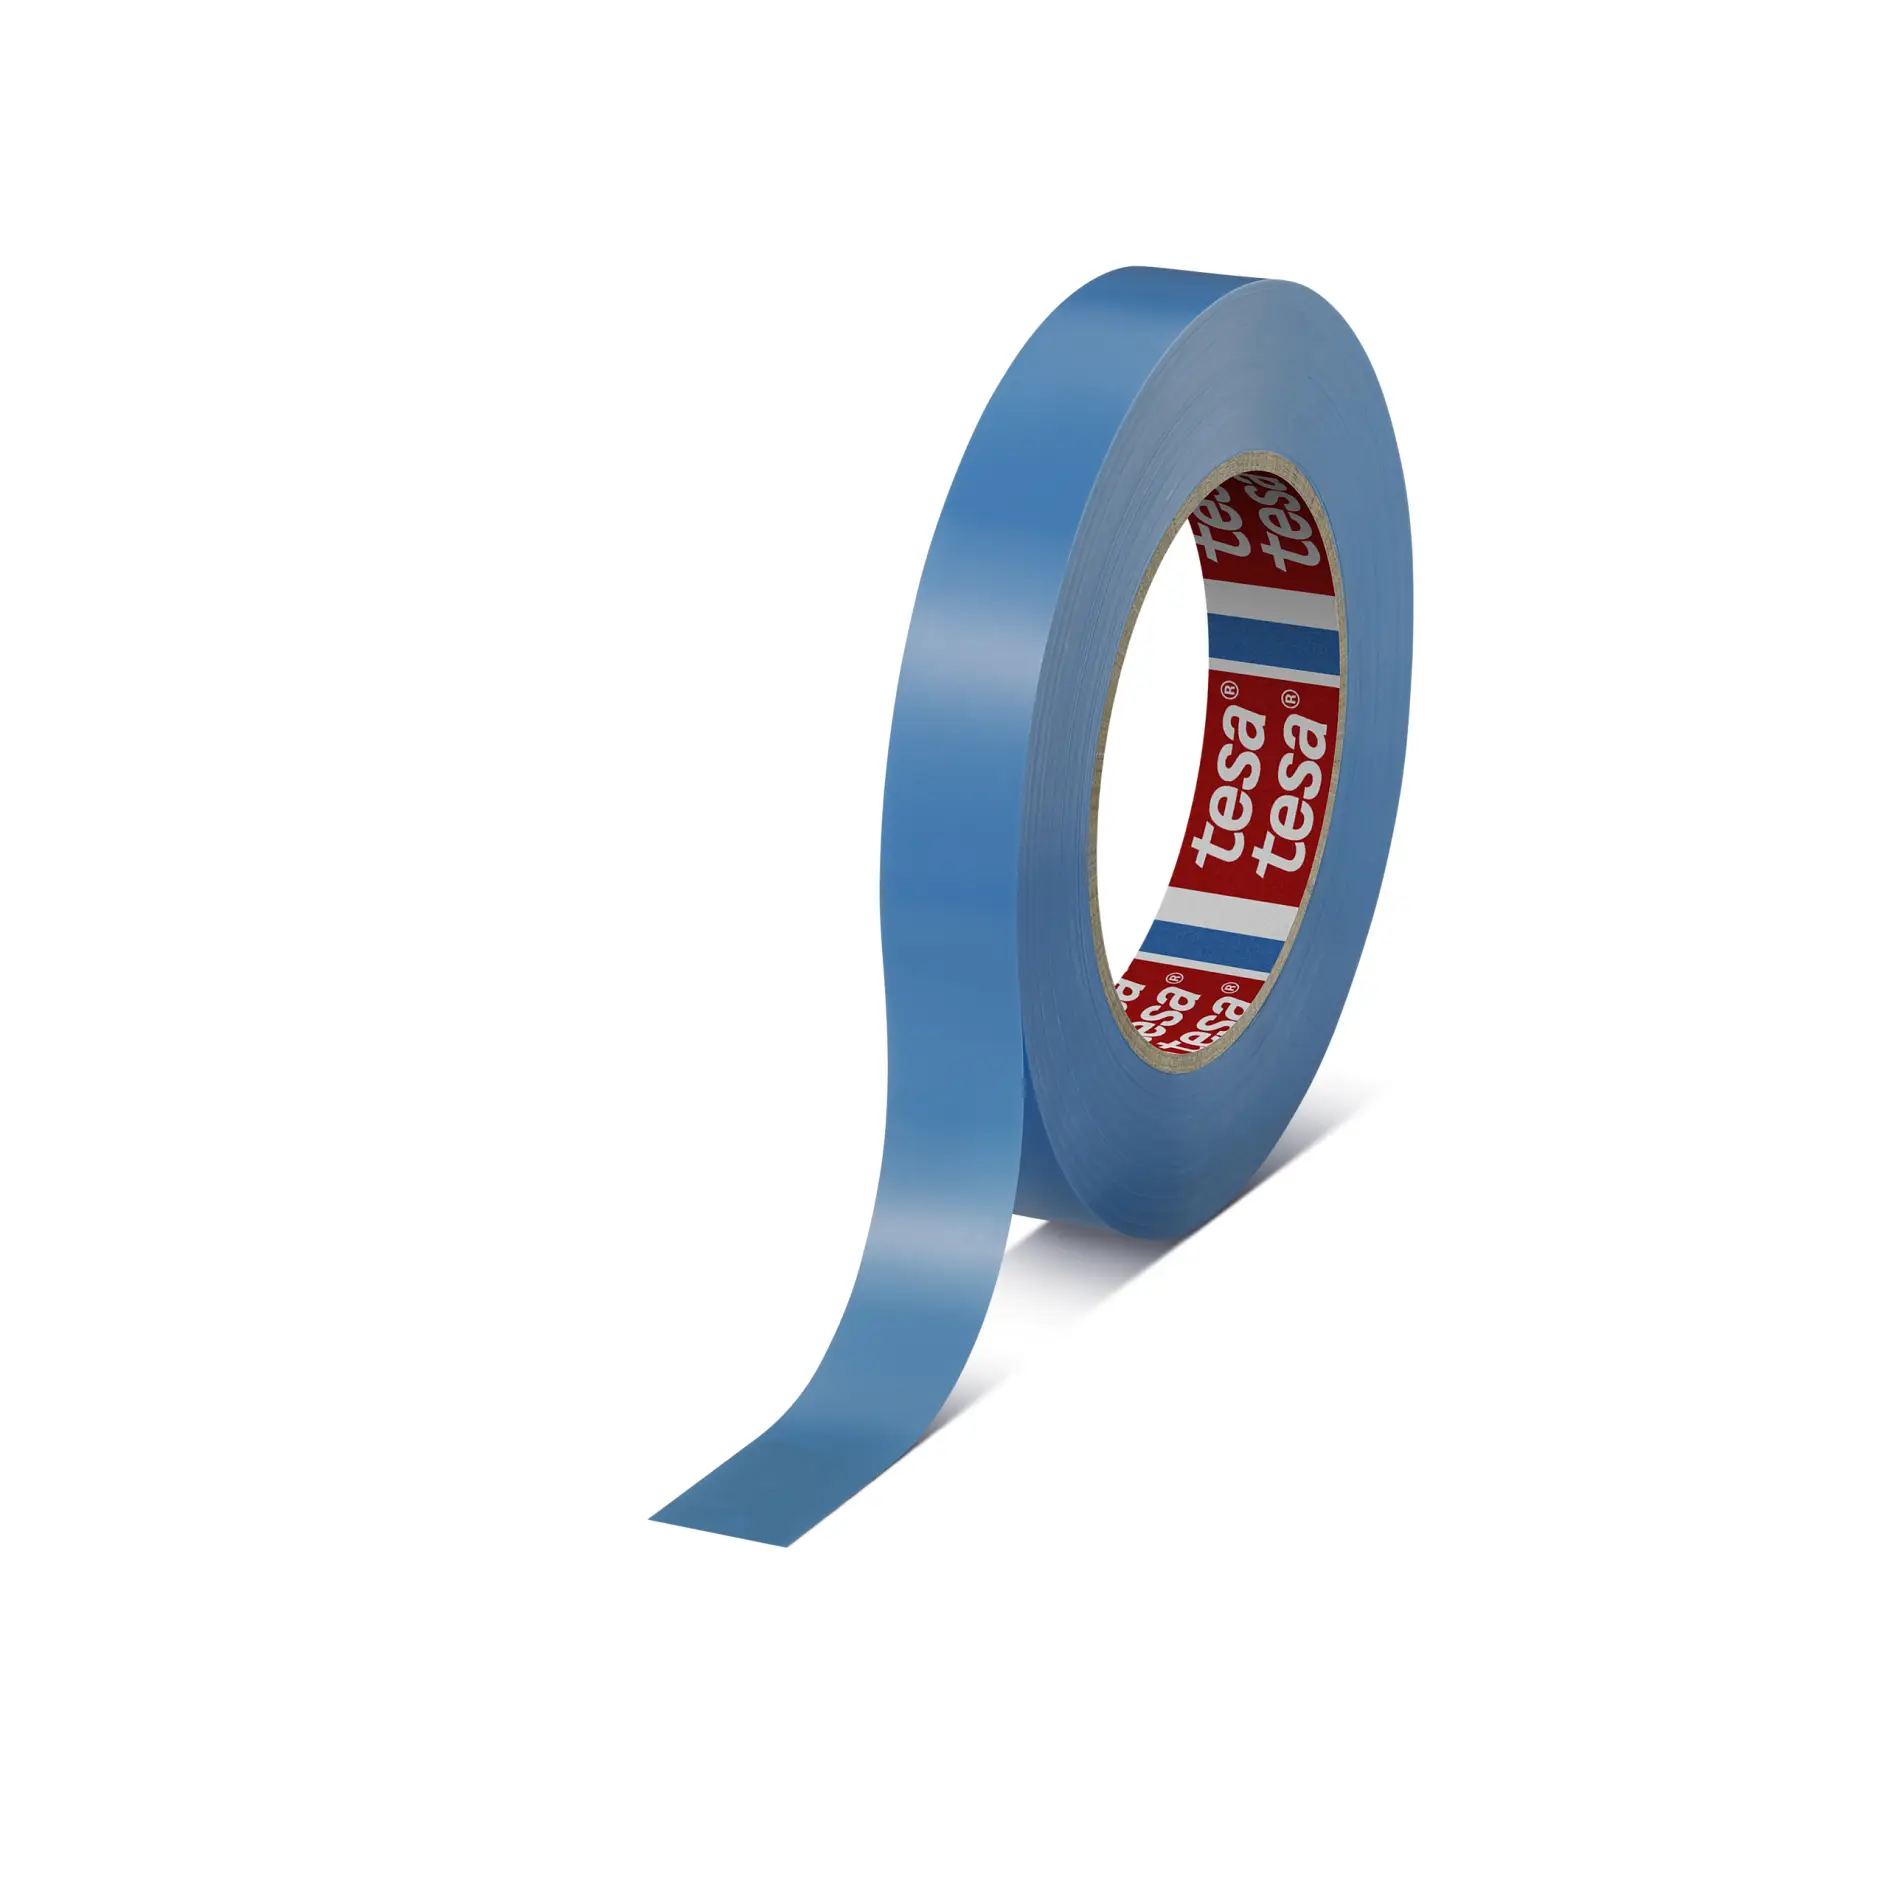 tesa-4298-medium-duty-non-staining-strapping-tape-light-blue-042980020700-pr